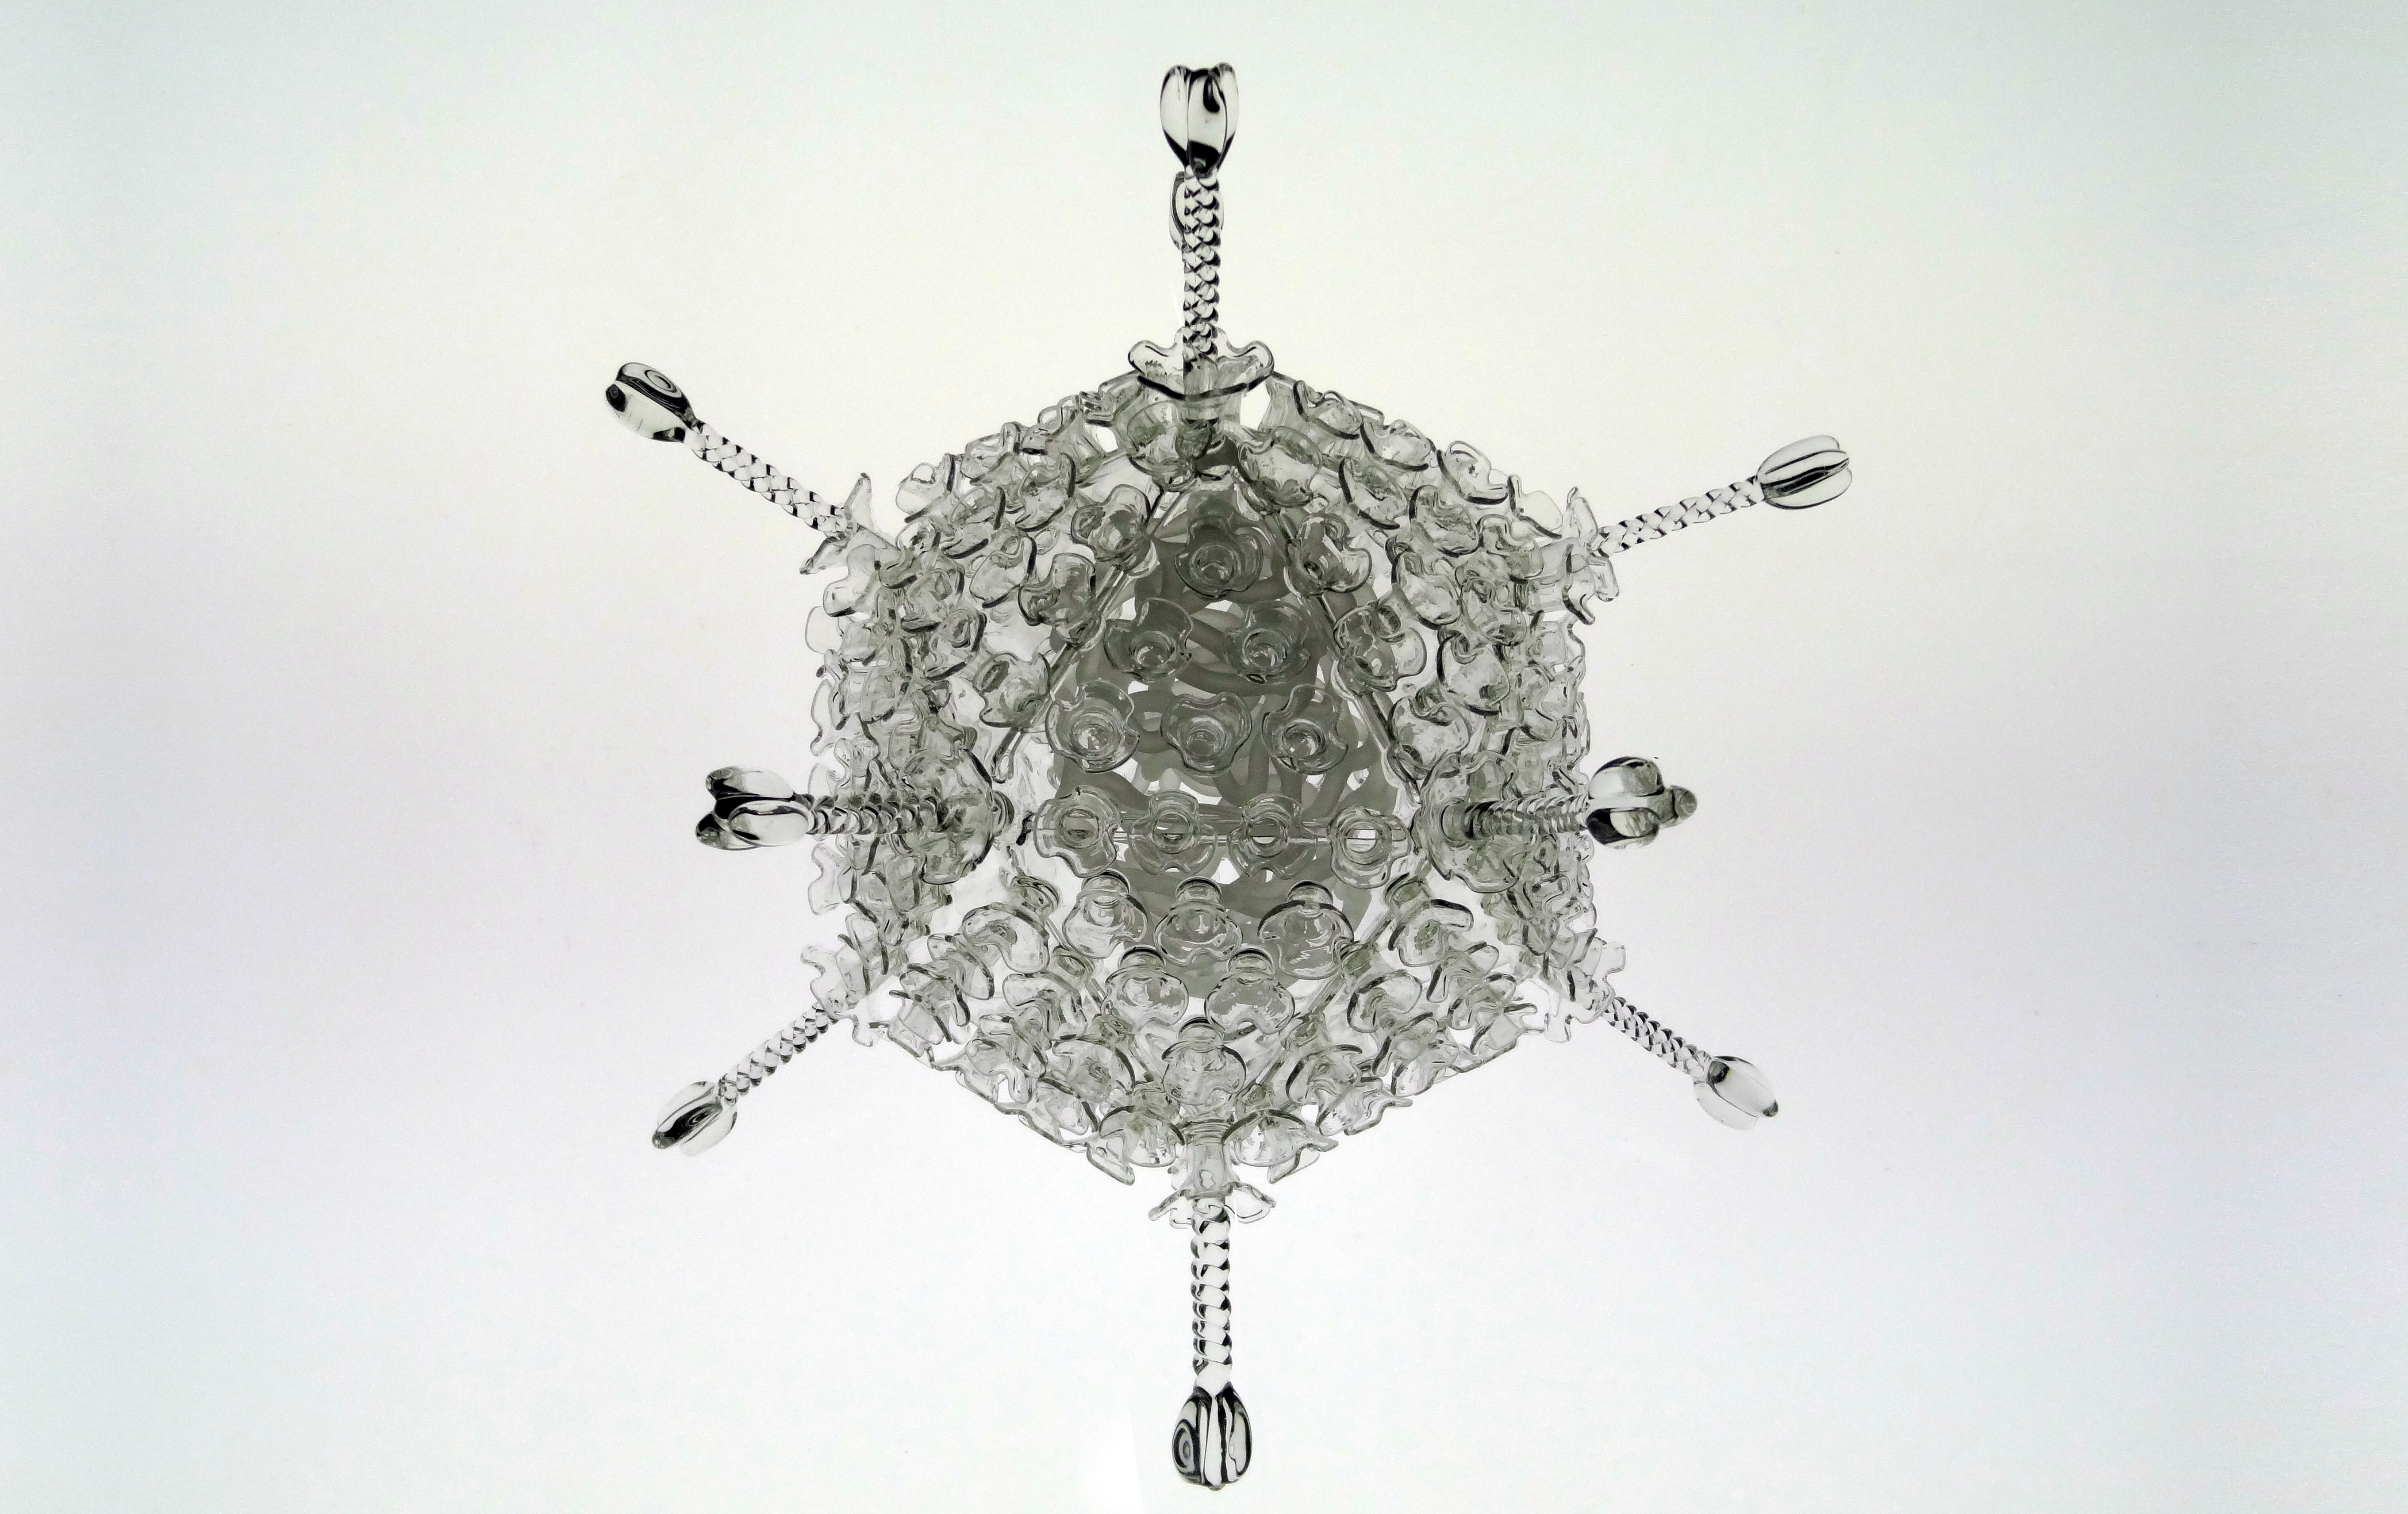 infectious beauty u2026 glass sculptures of viruses